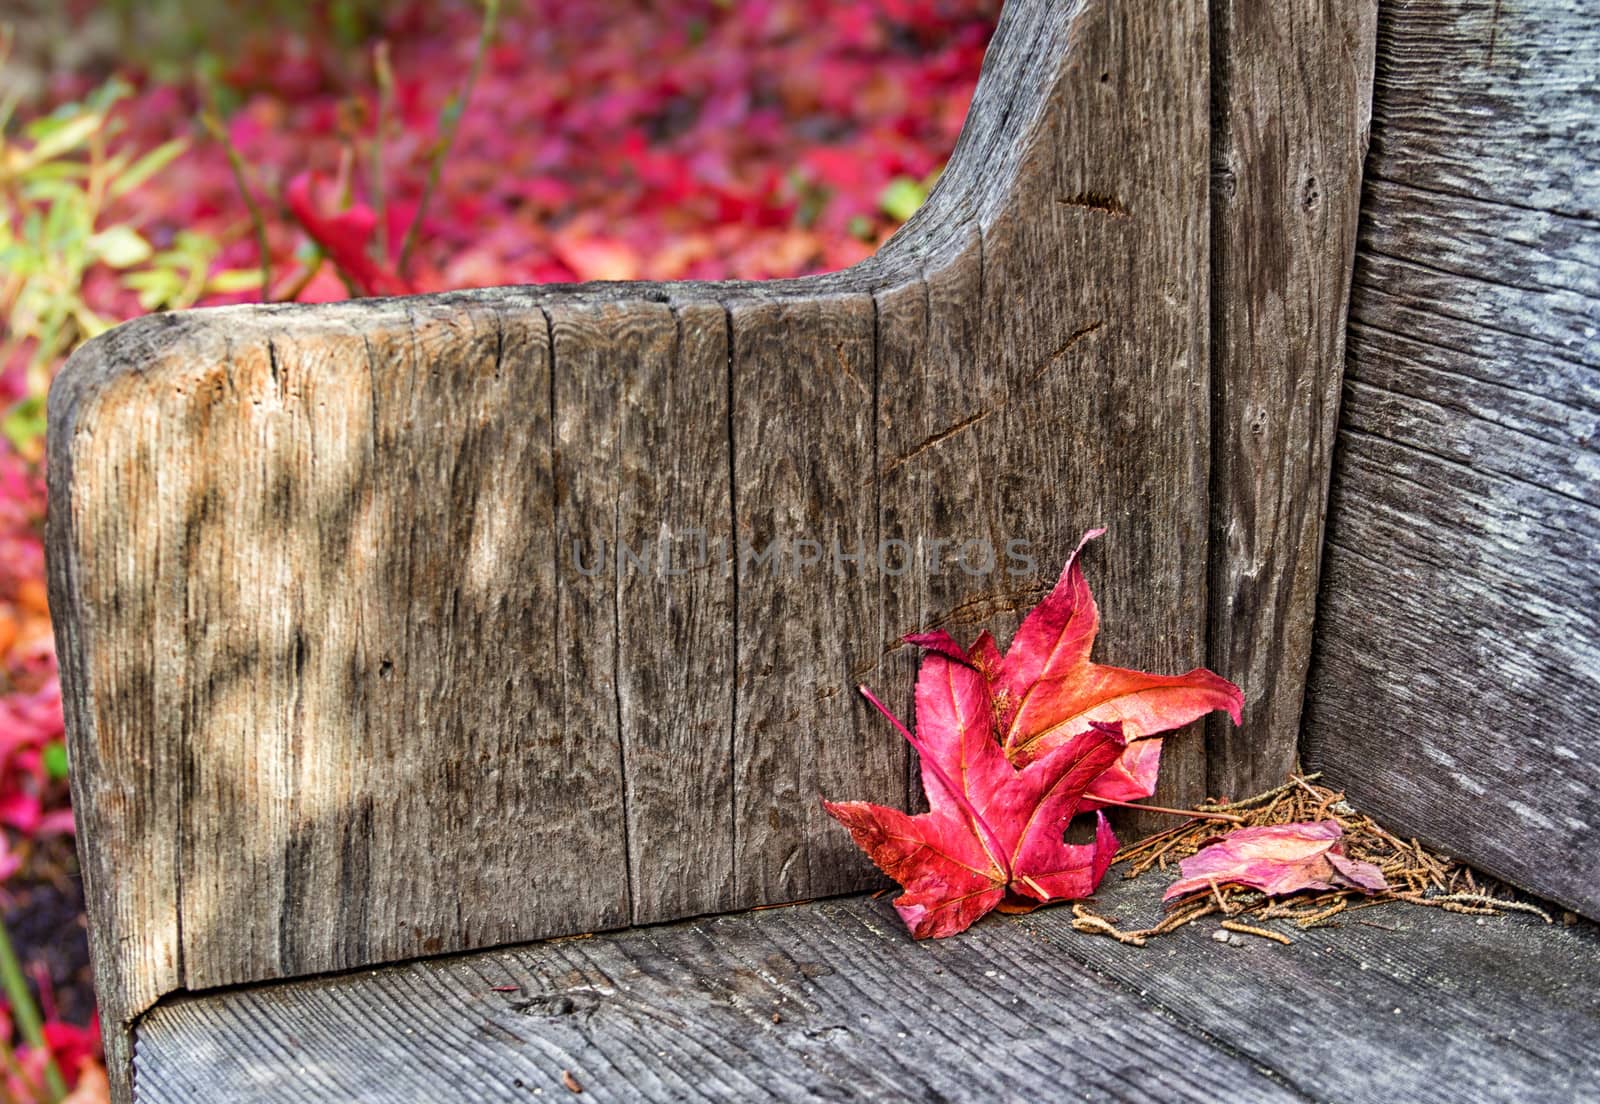 Crimson Red Leaves on Wood Park Bench